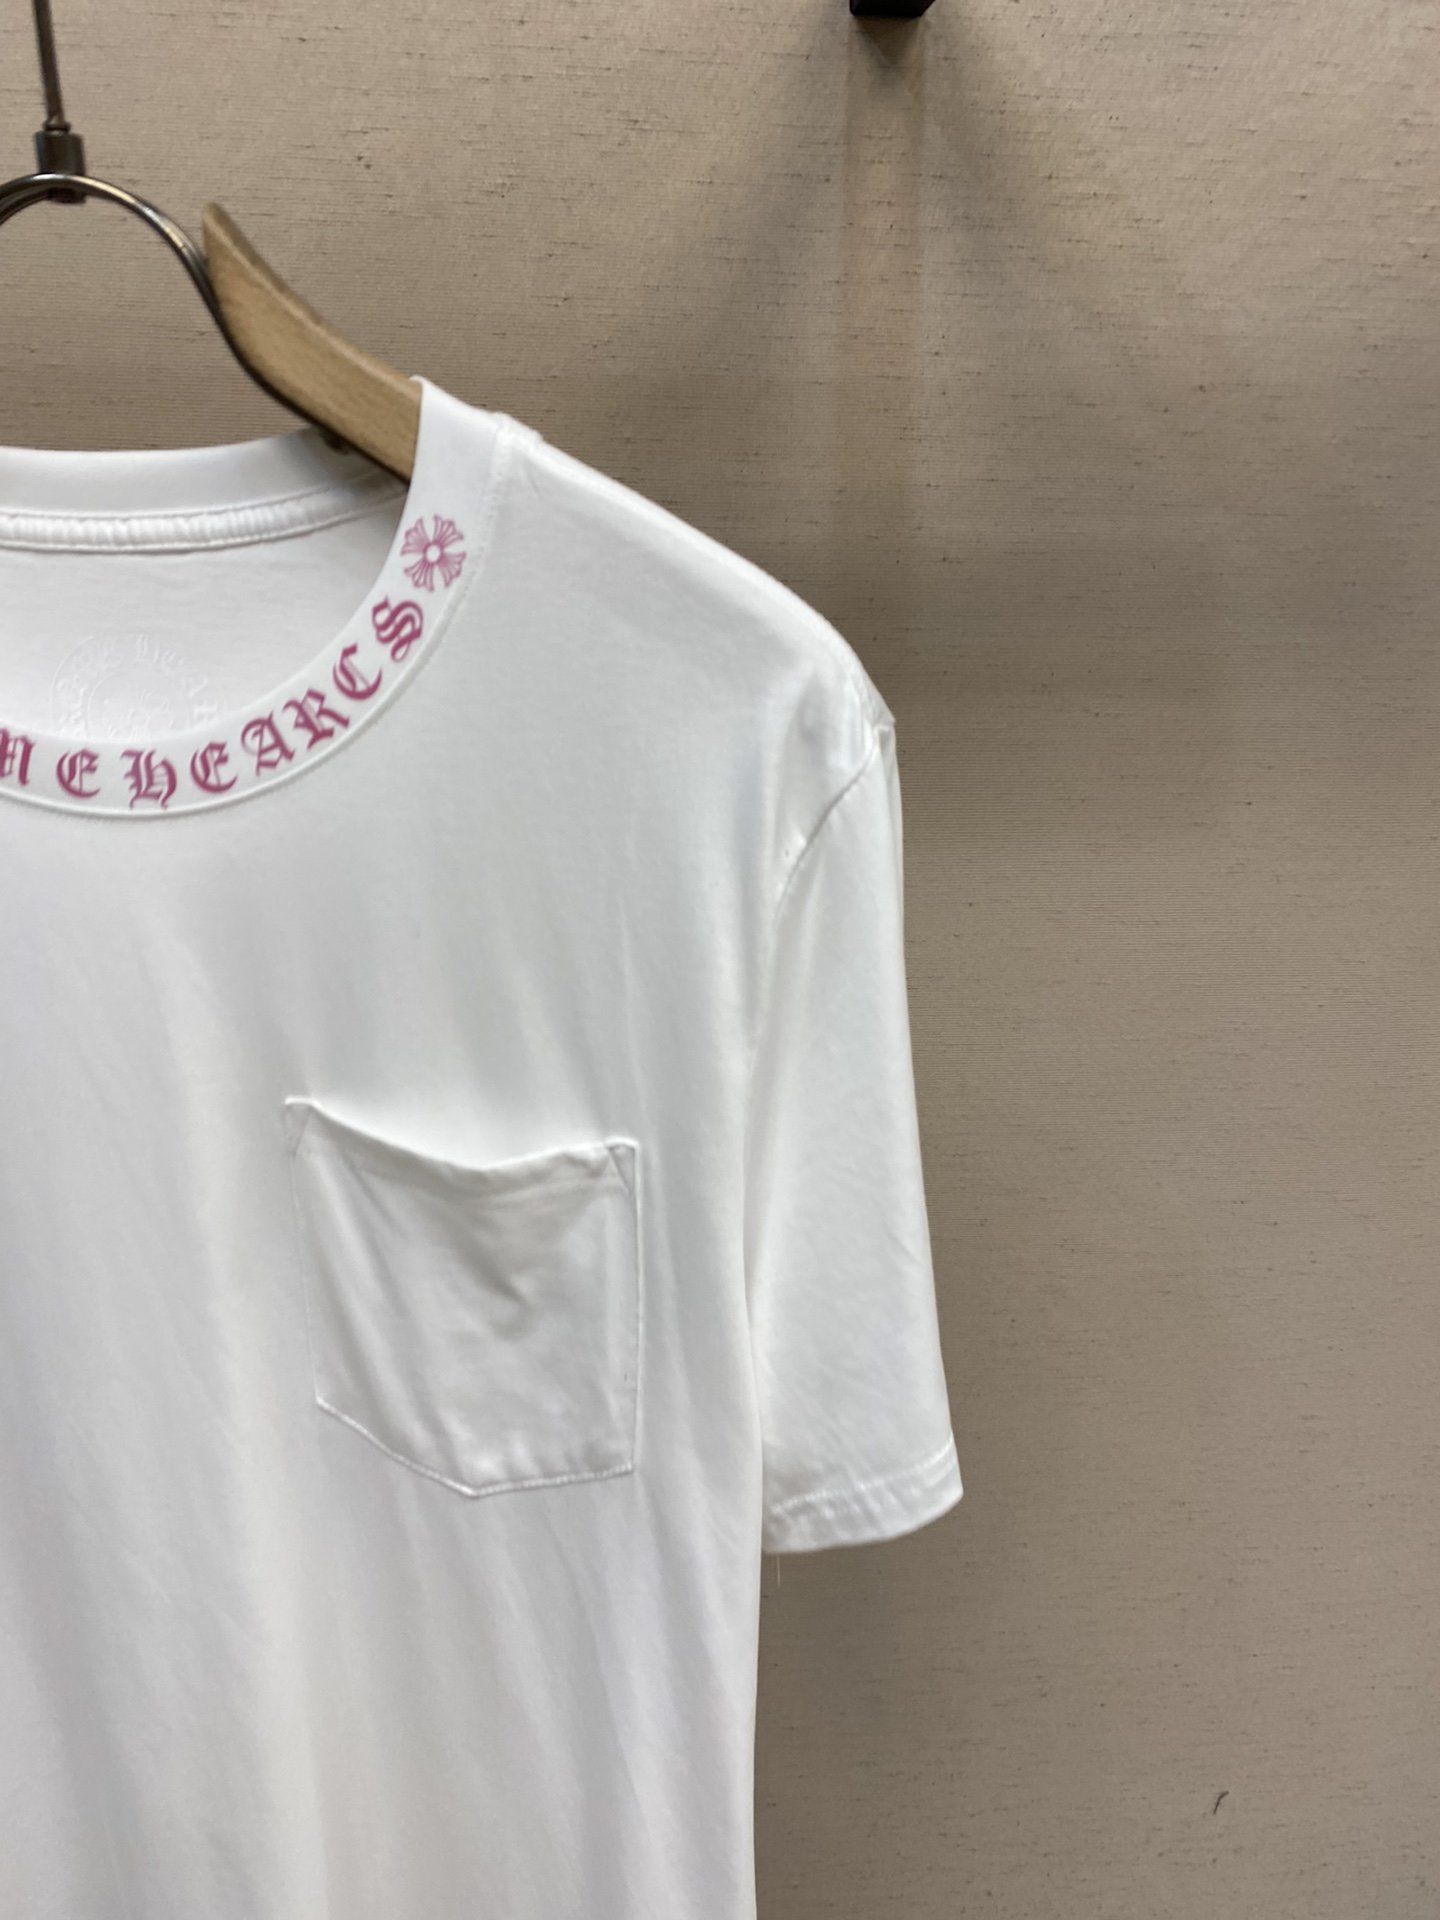 CheomeHeaet克罗心SS情侣款领口logo短袖T恤精细的做工和上乘的质感一贯地标签化显著一眼即可